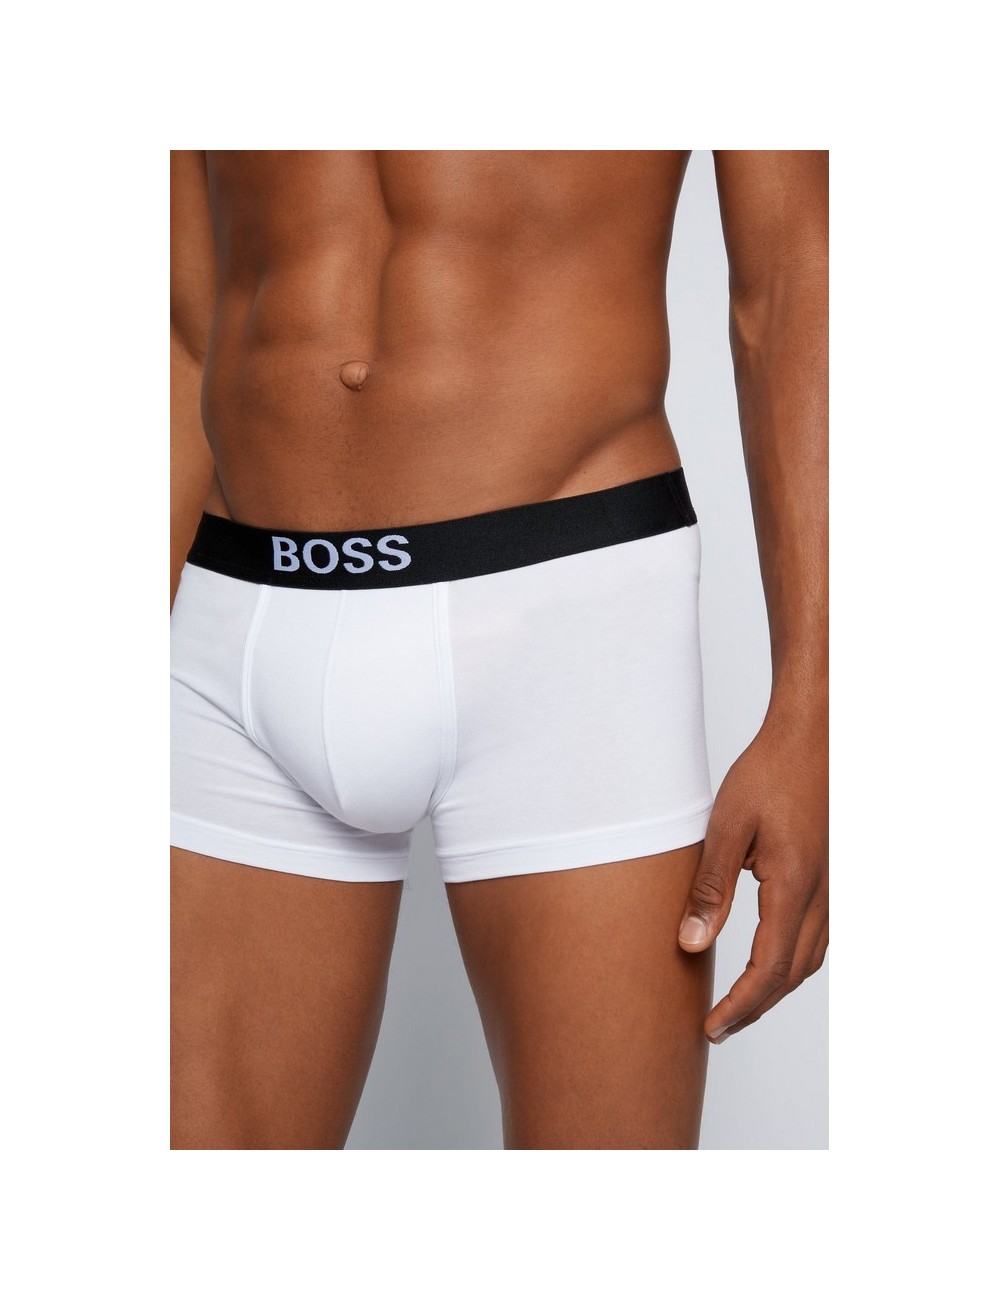 Hugo Boss Blanco Underpants